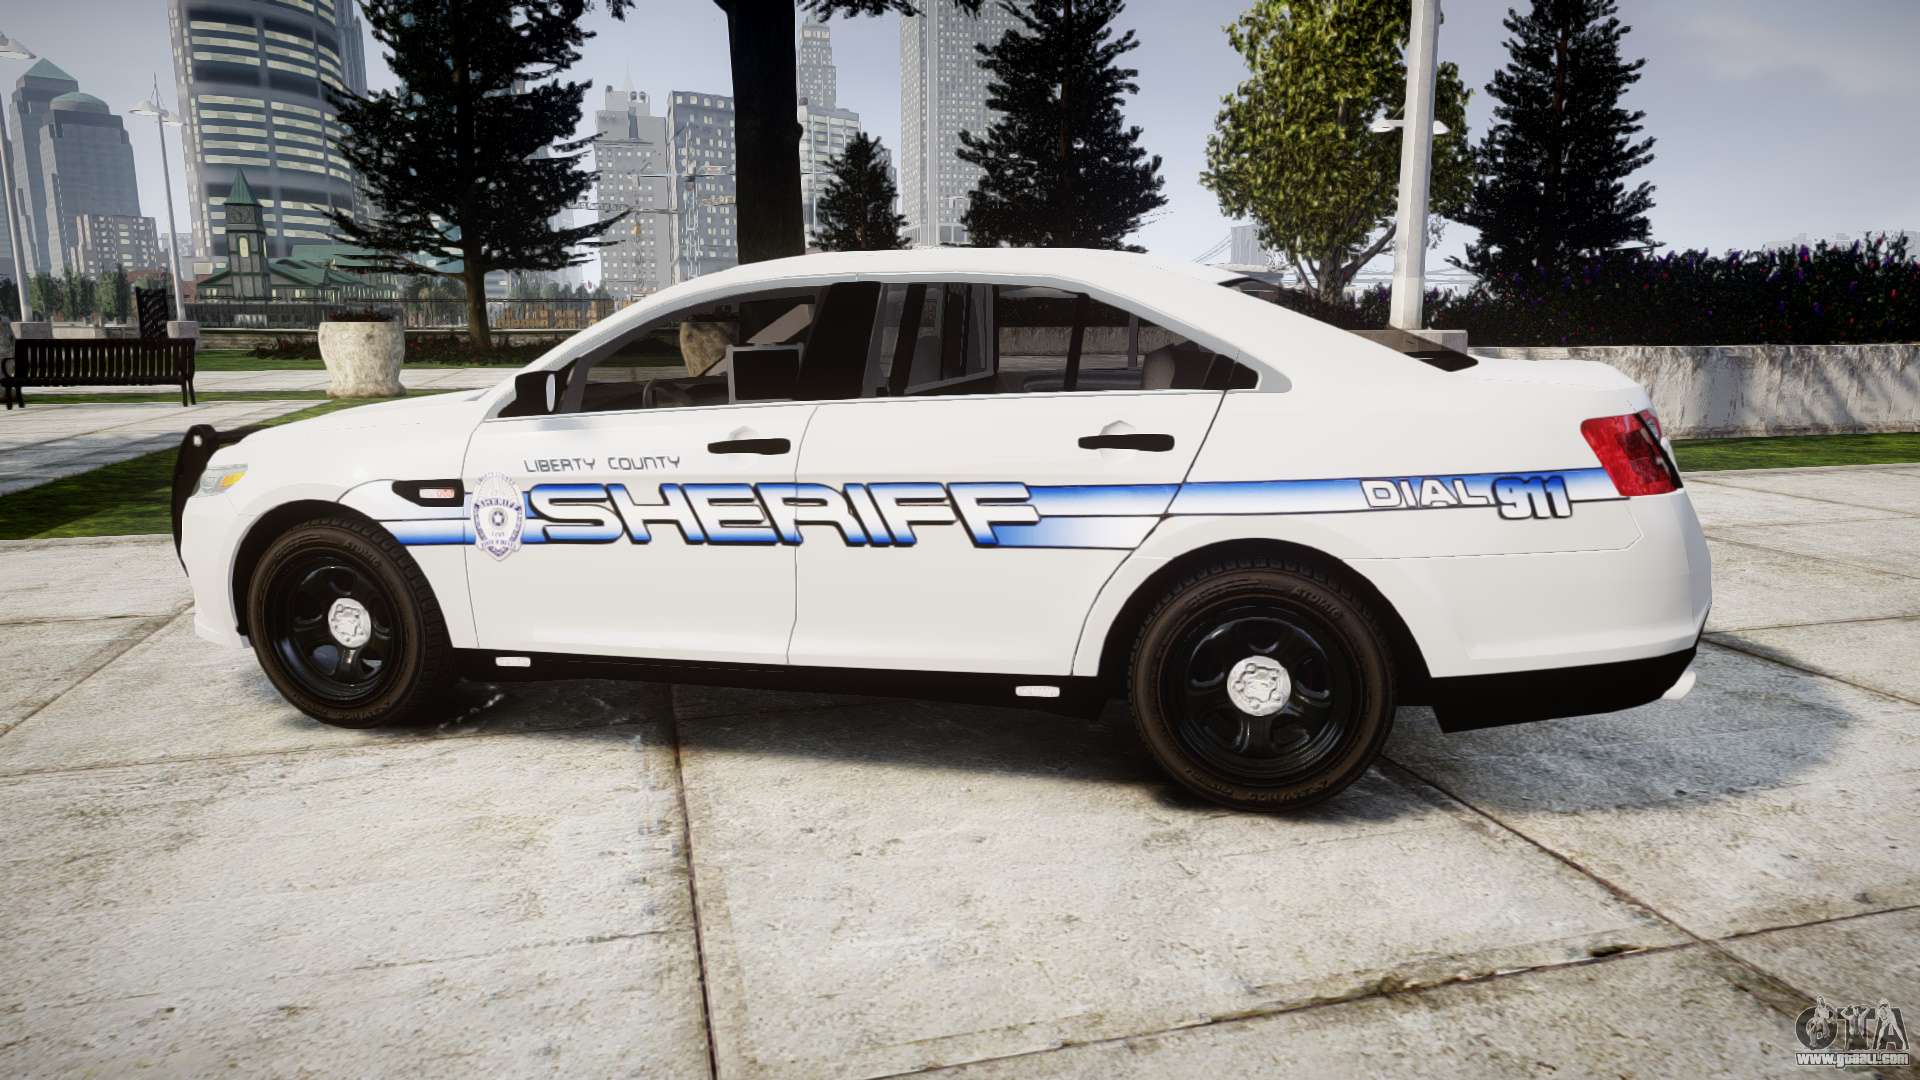 Ford Taurus 2014 [ELS] Liberty County Sheriff for GTA 4